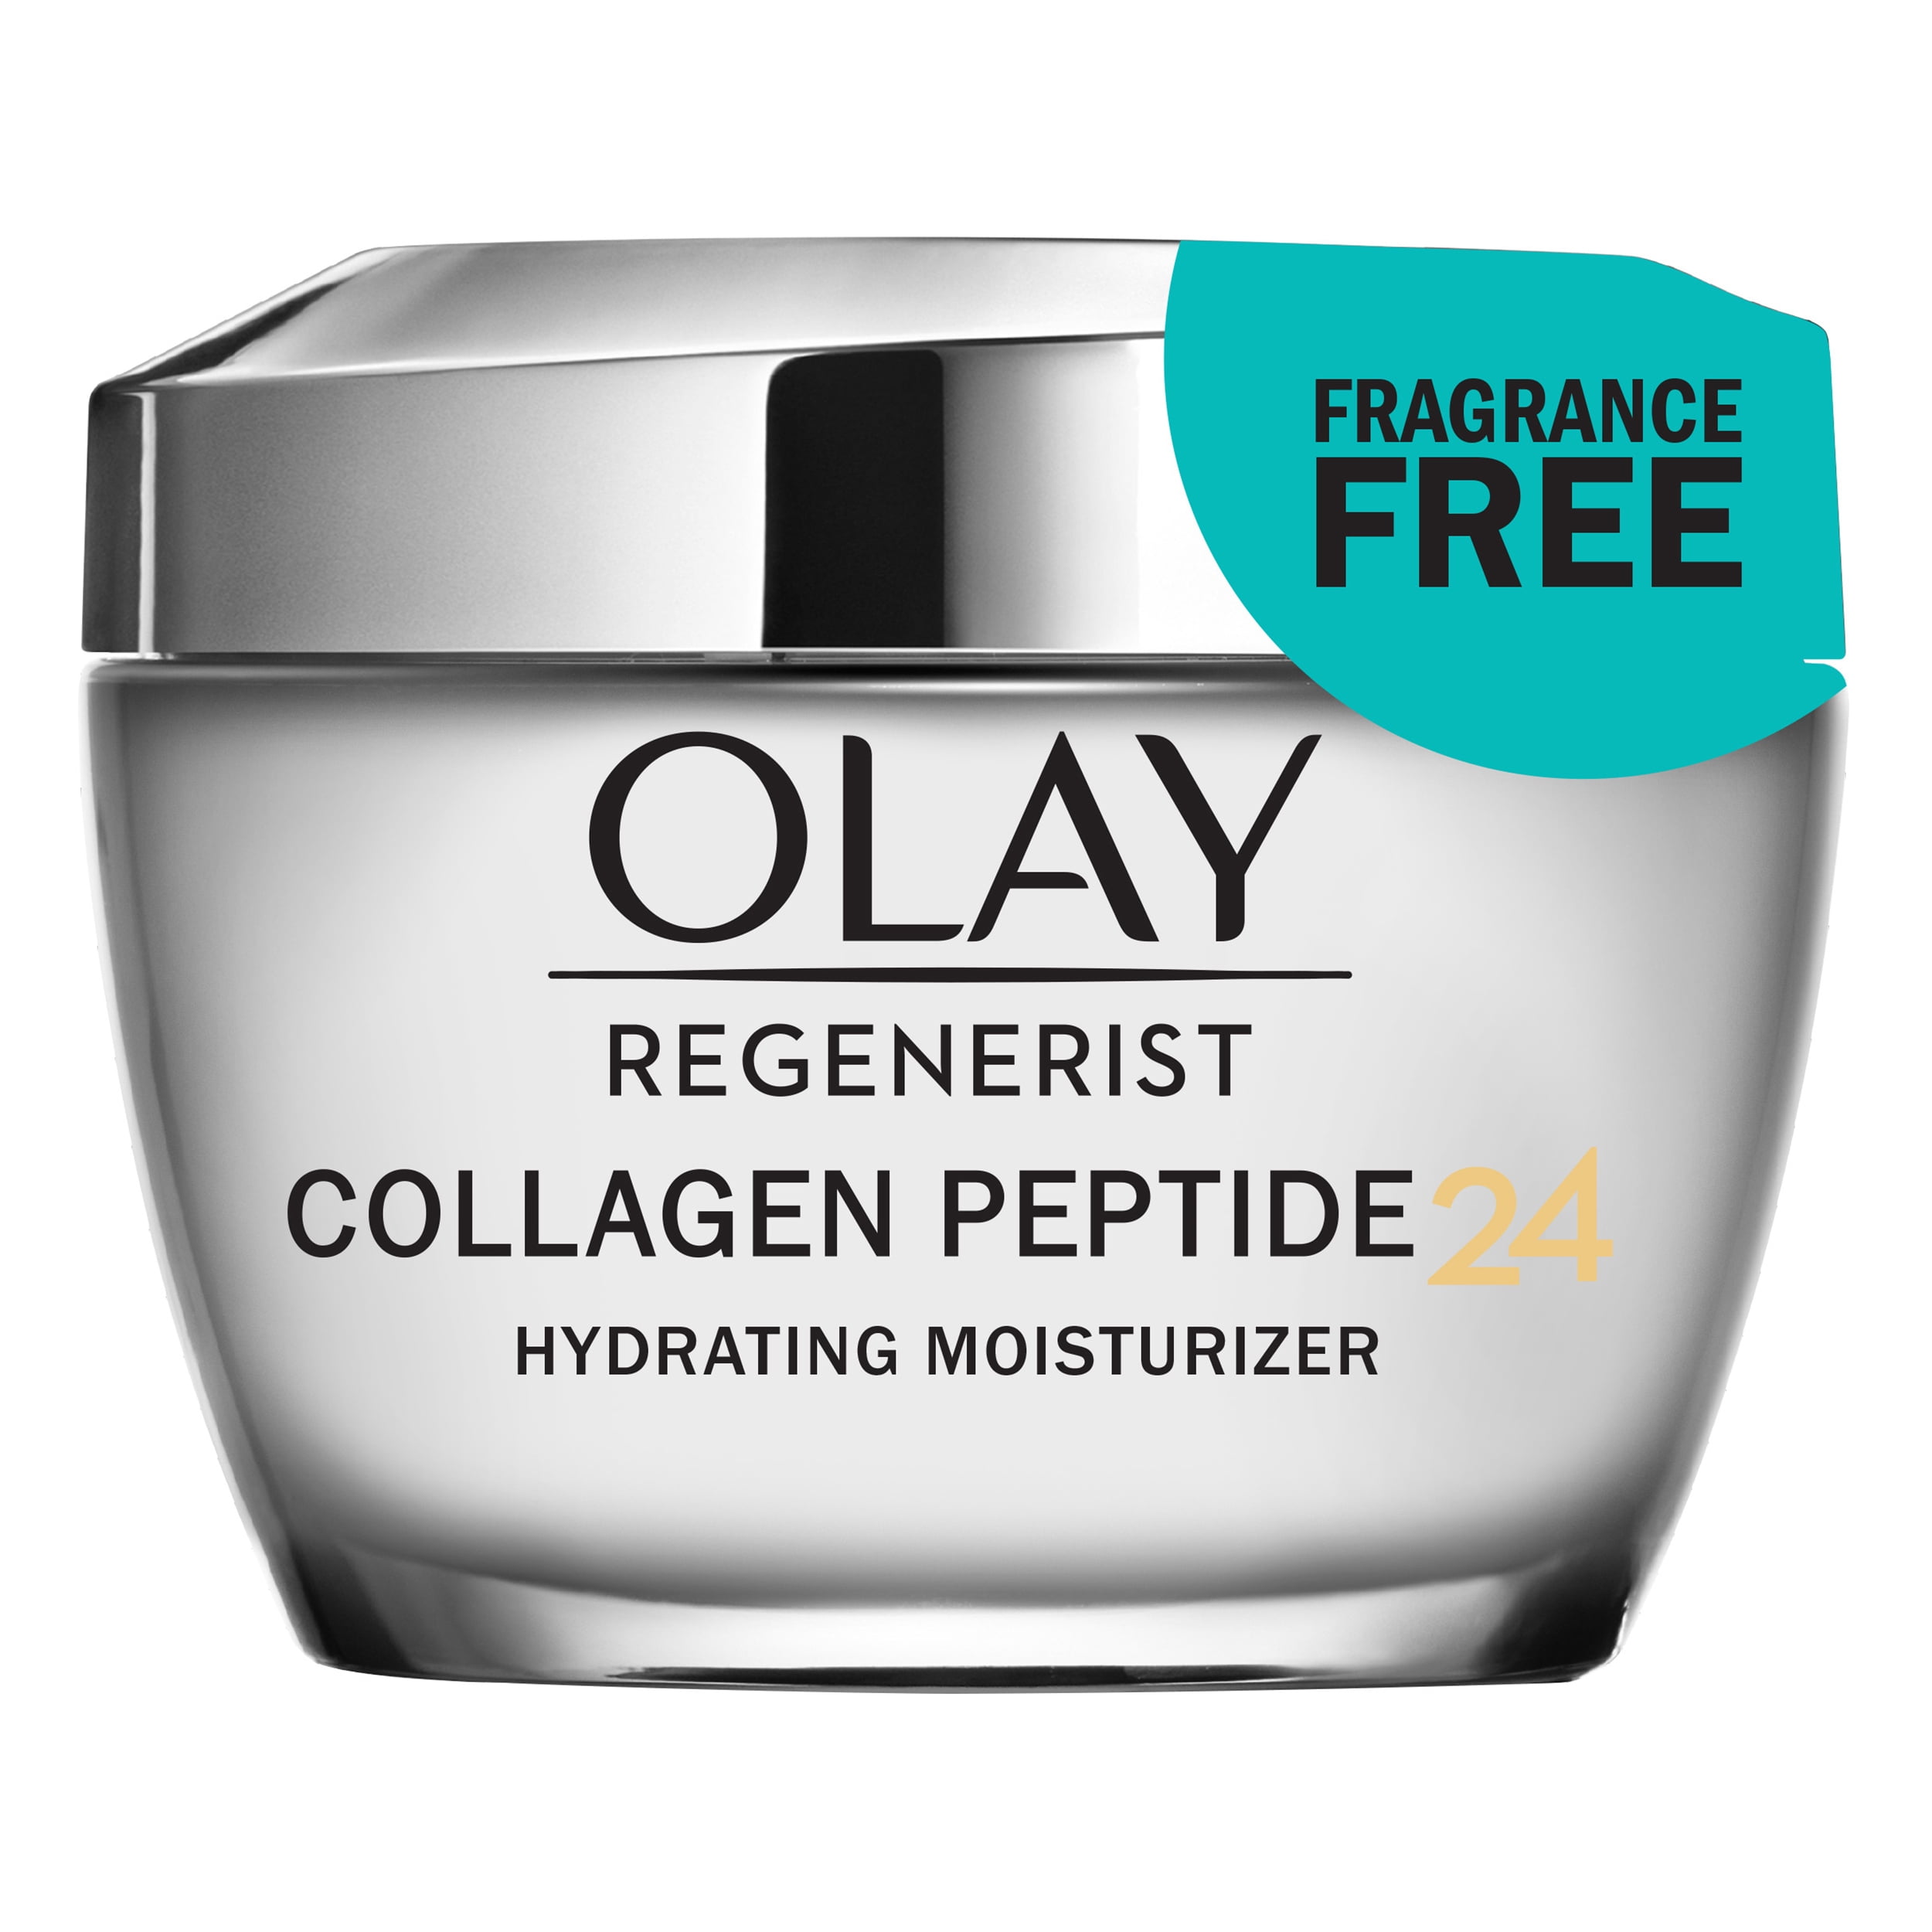 Olay Regenerist Collagen Peptide 24 Face Moisturizer Cream, 1.7 oz